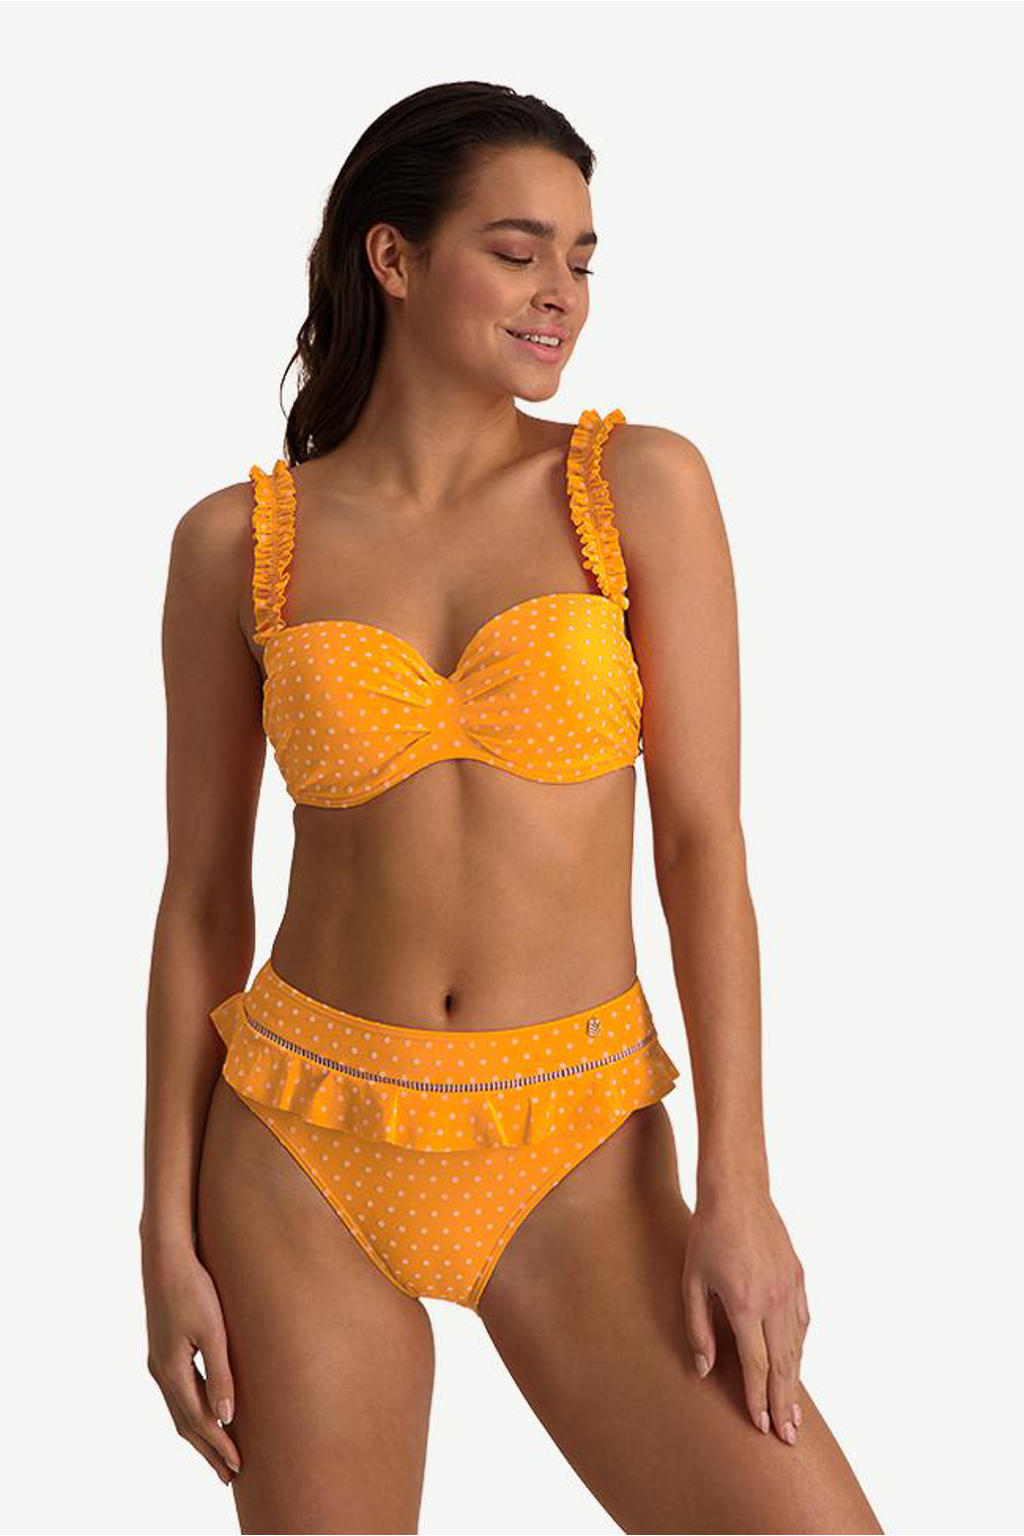 Beachlife high waist bikinibroekje met ruches en flockprint stippen oranje/wit